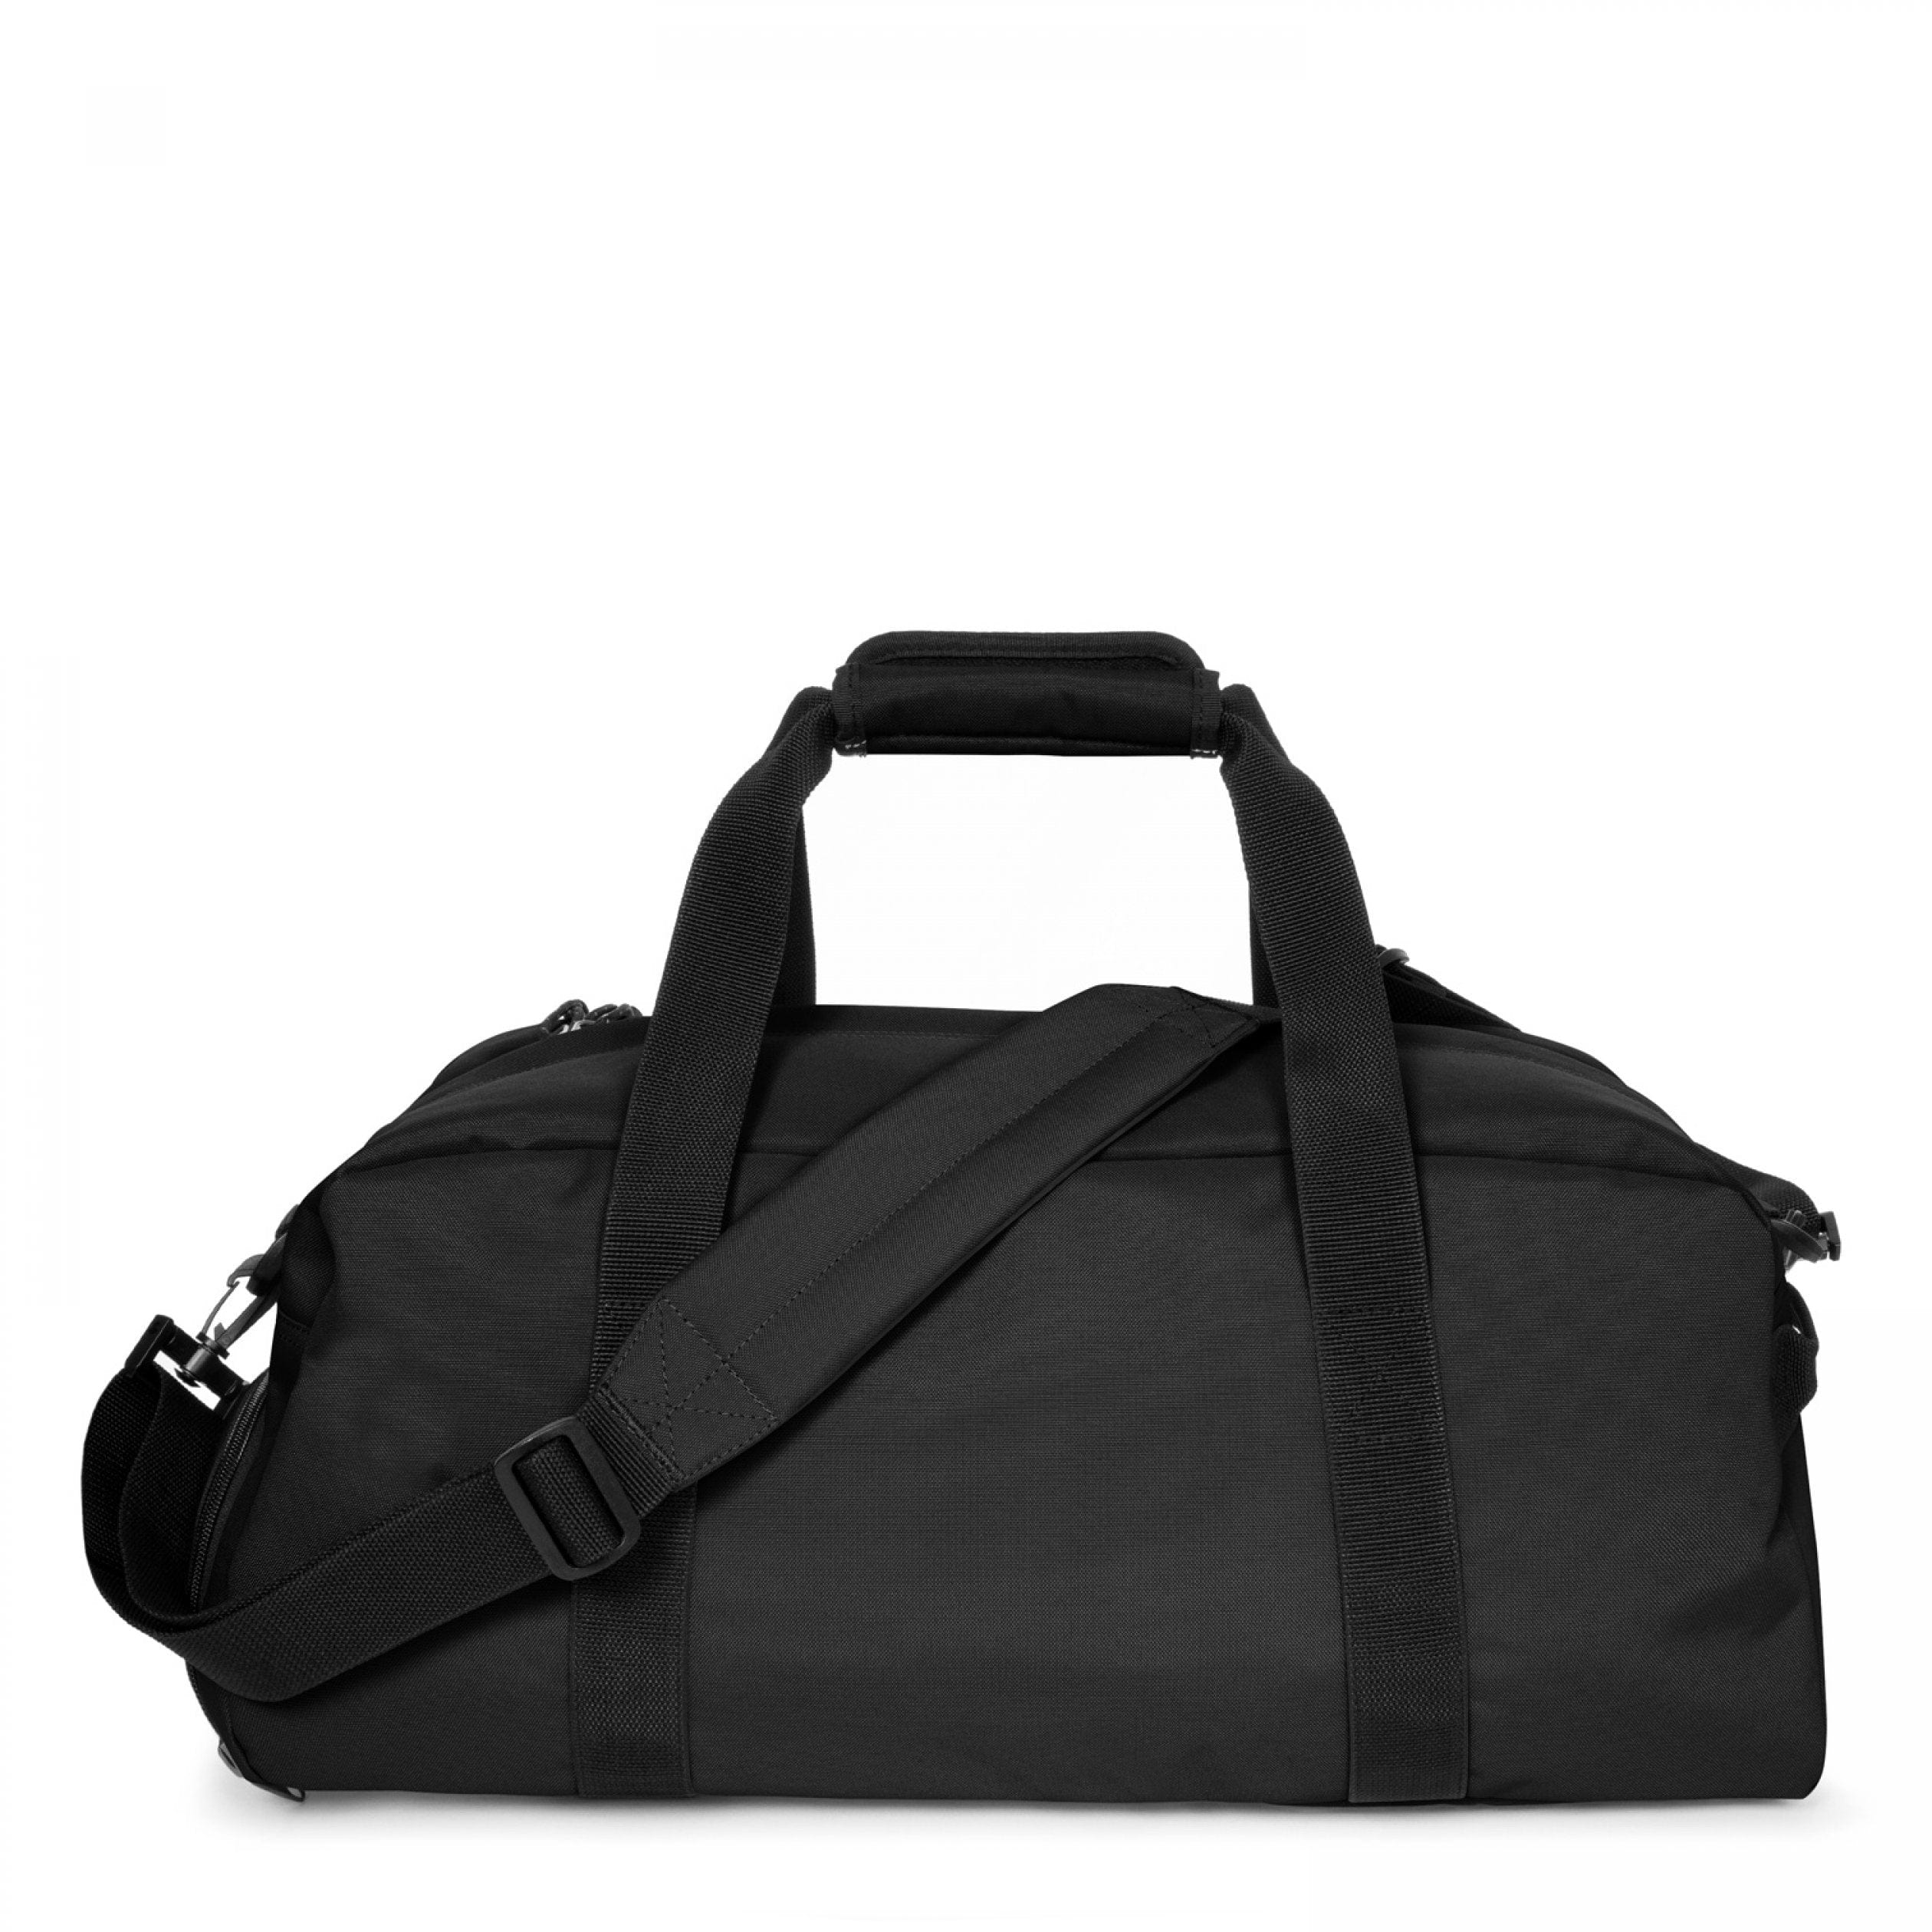 EASTPAK-Stand More-foldaway duffle bag-Black-EK0A5B9H008